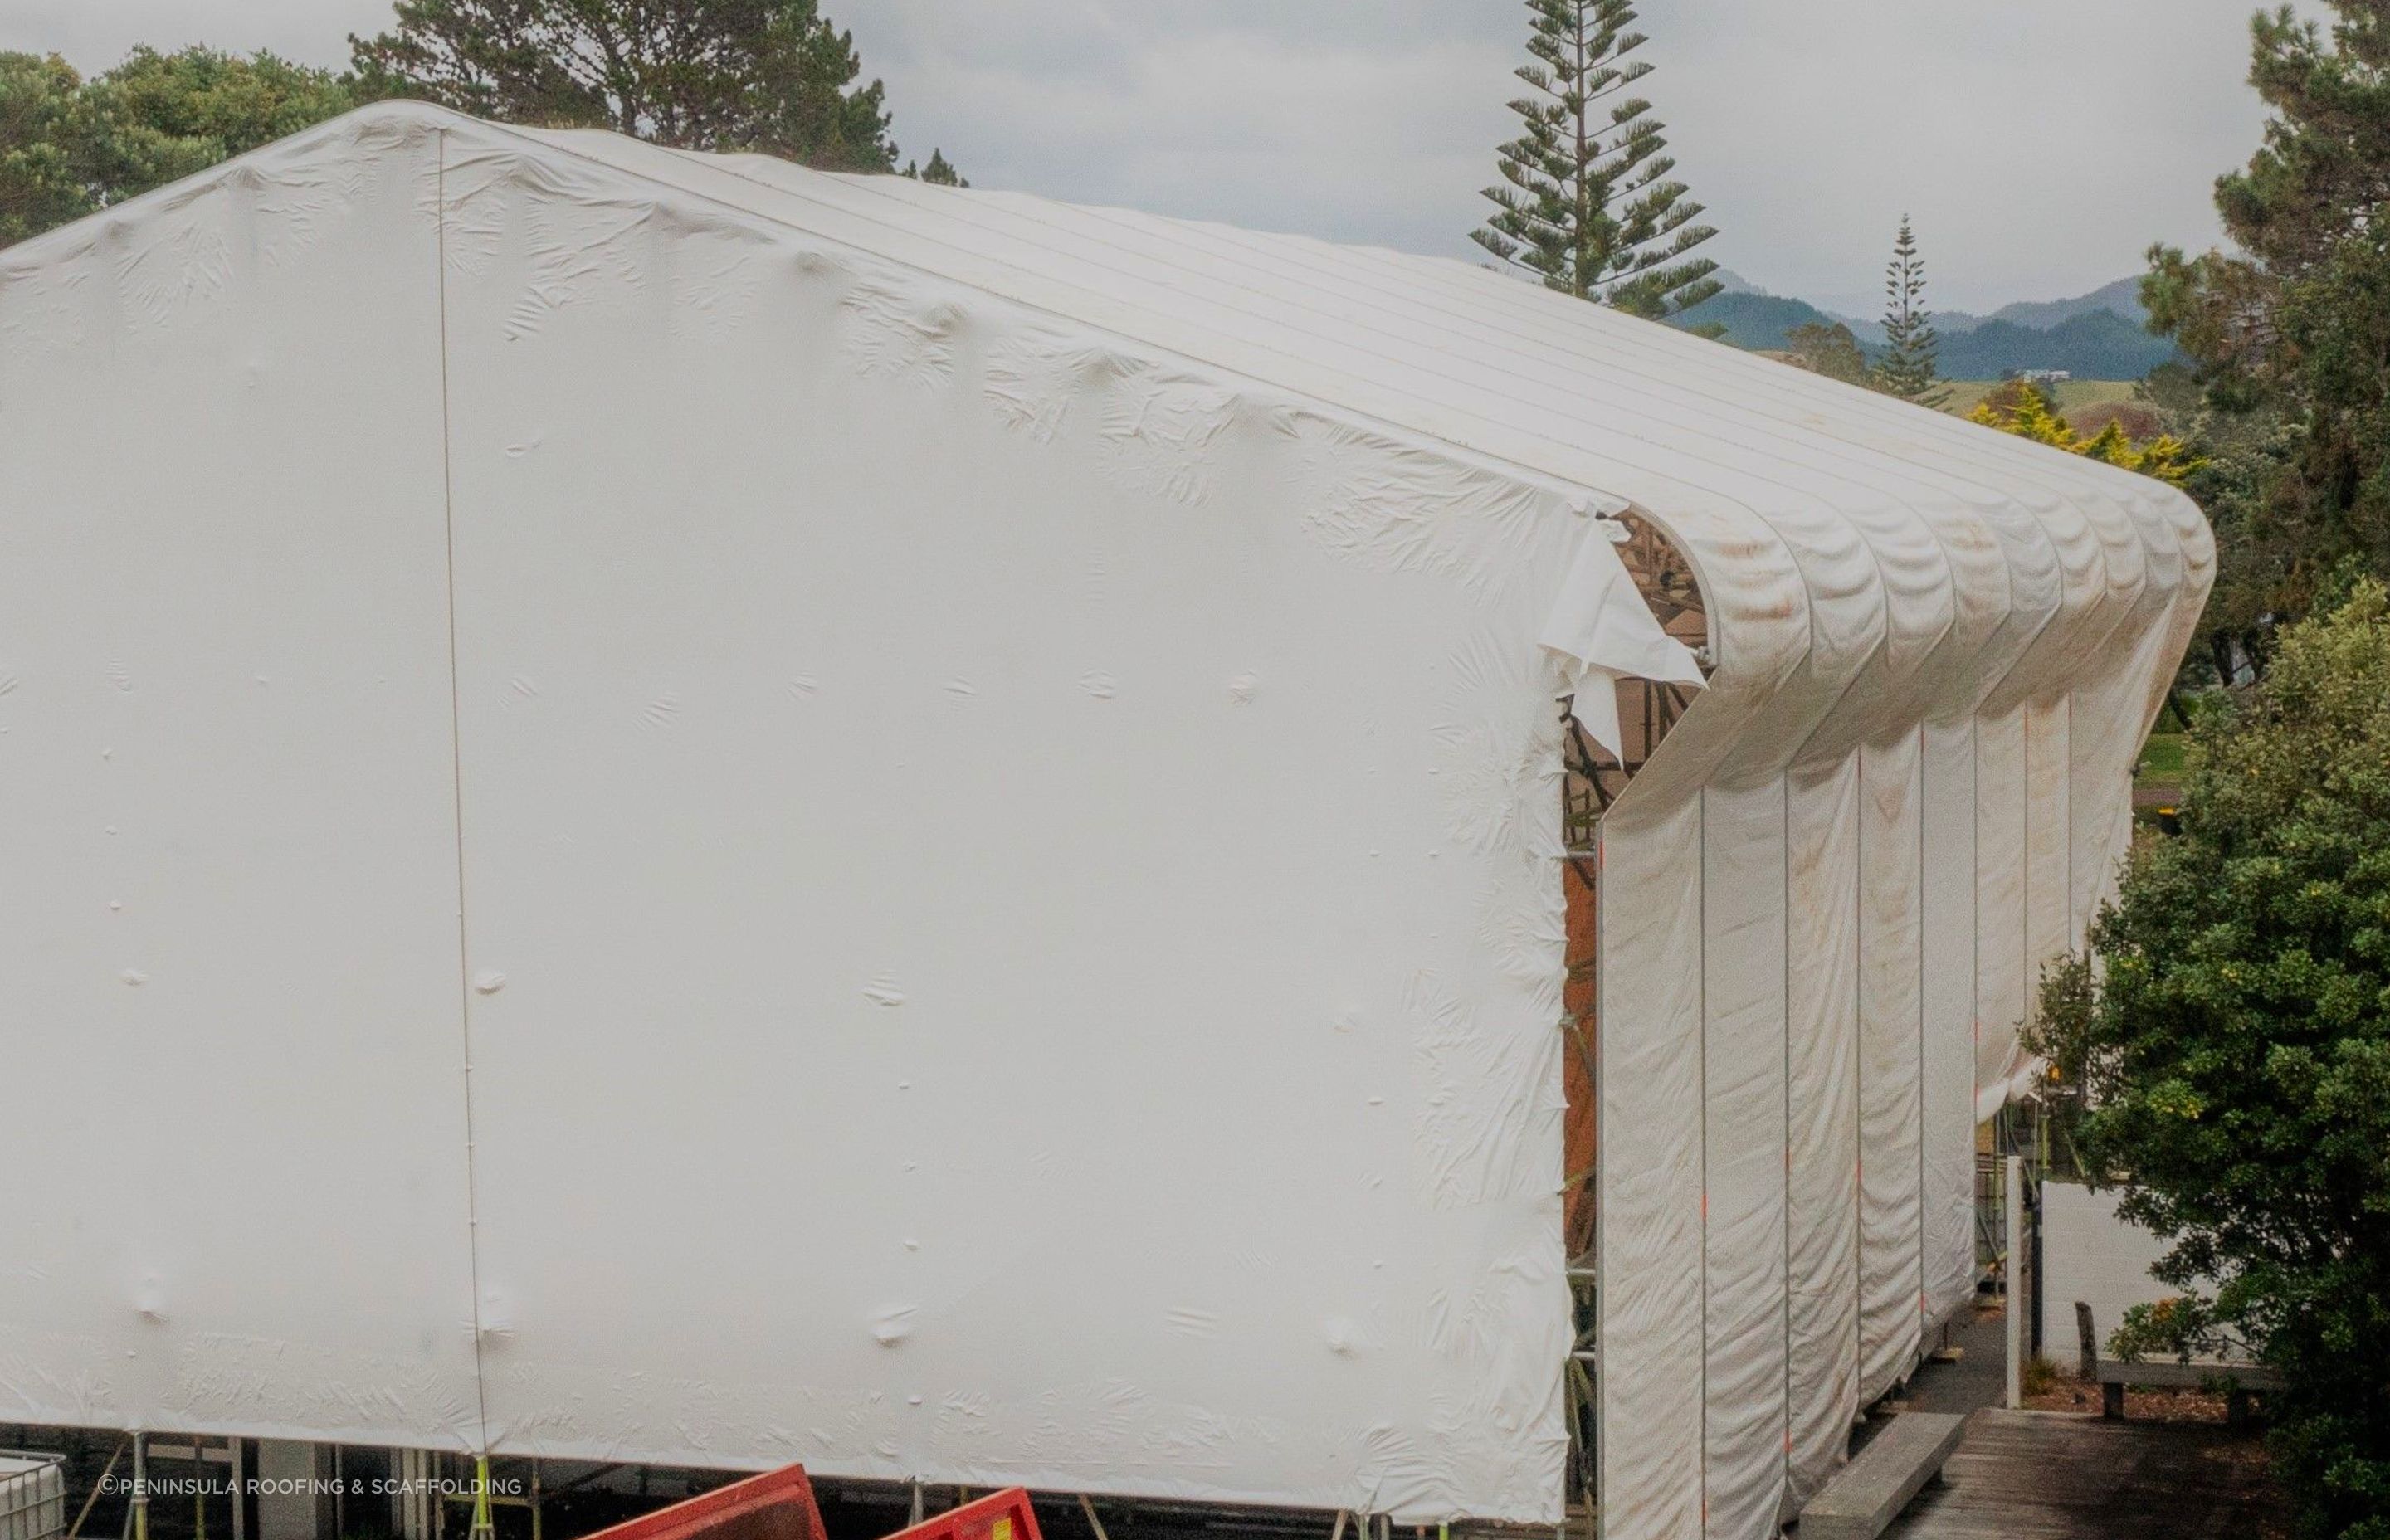 It's A Wrap - Shrink-wrap versus Layher Keder (PVC SheetingTarpaulin) Roof System